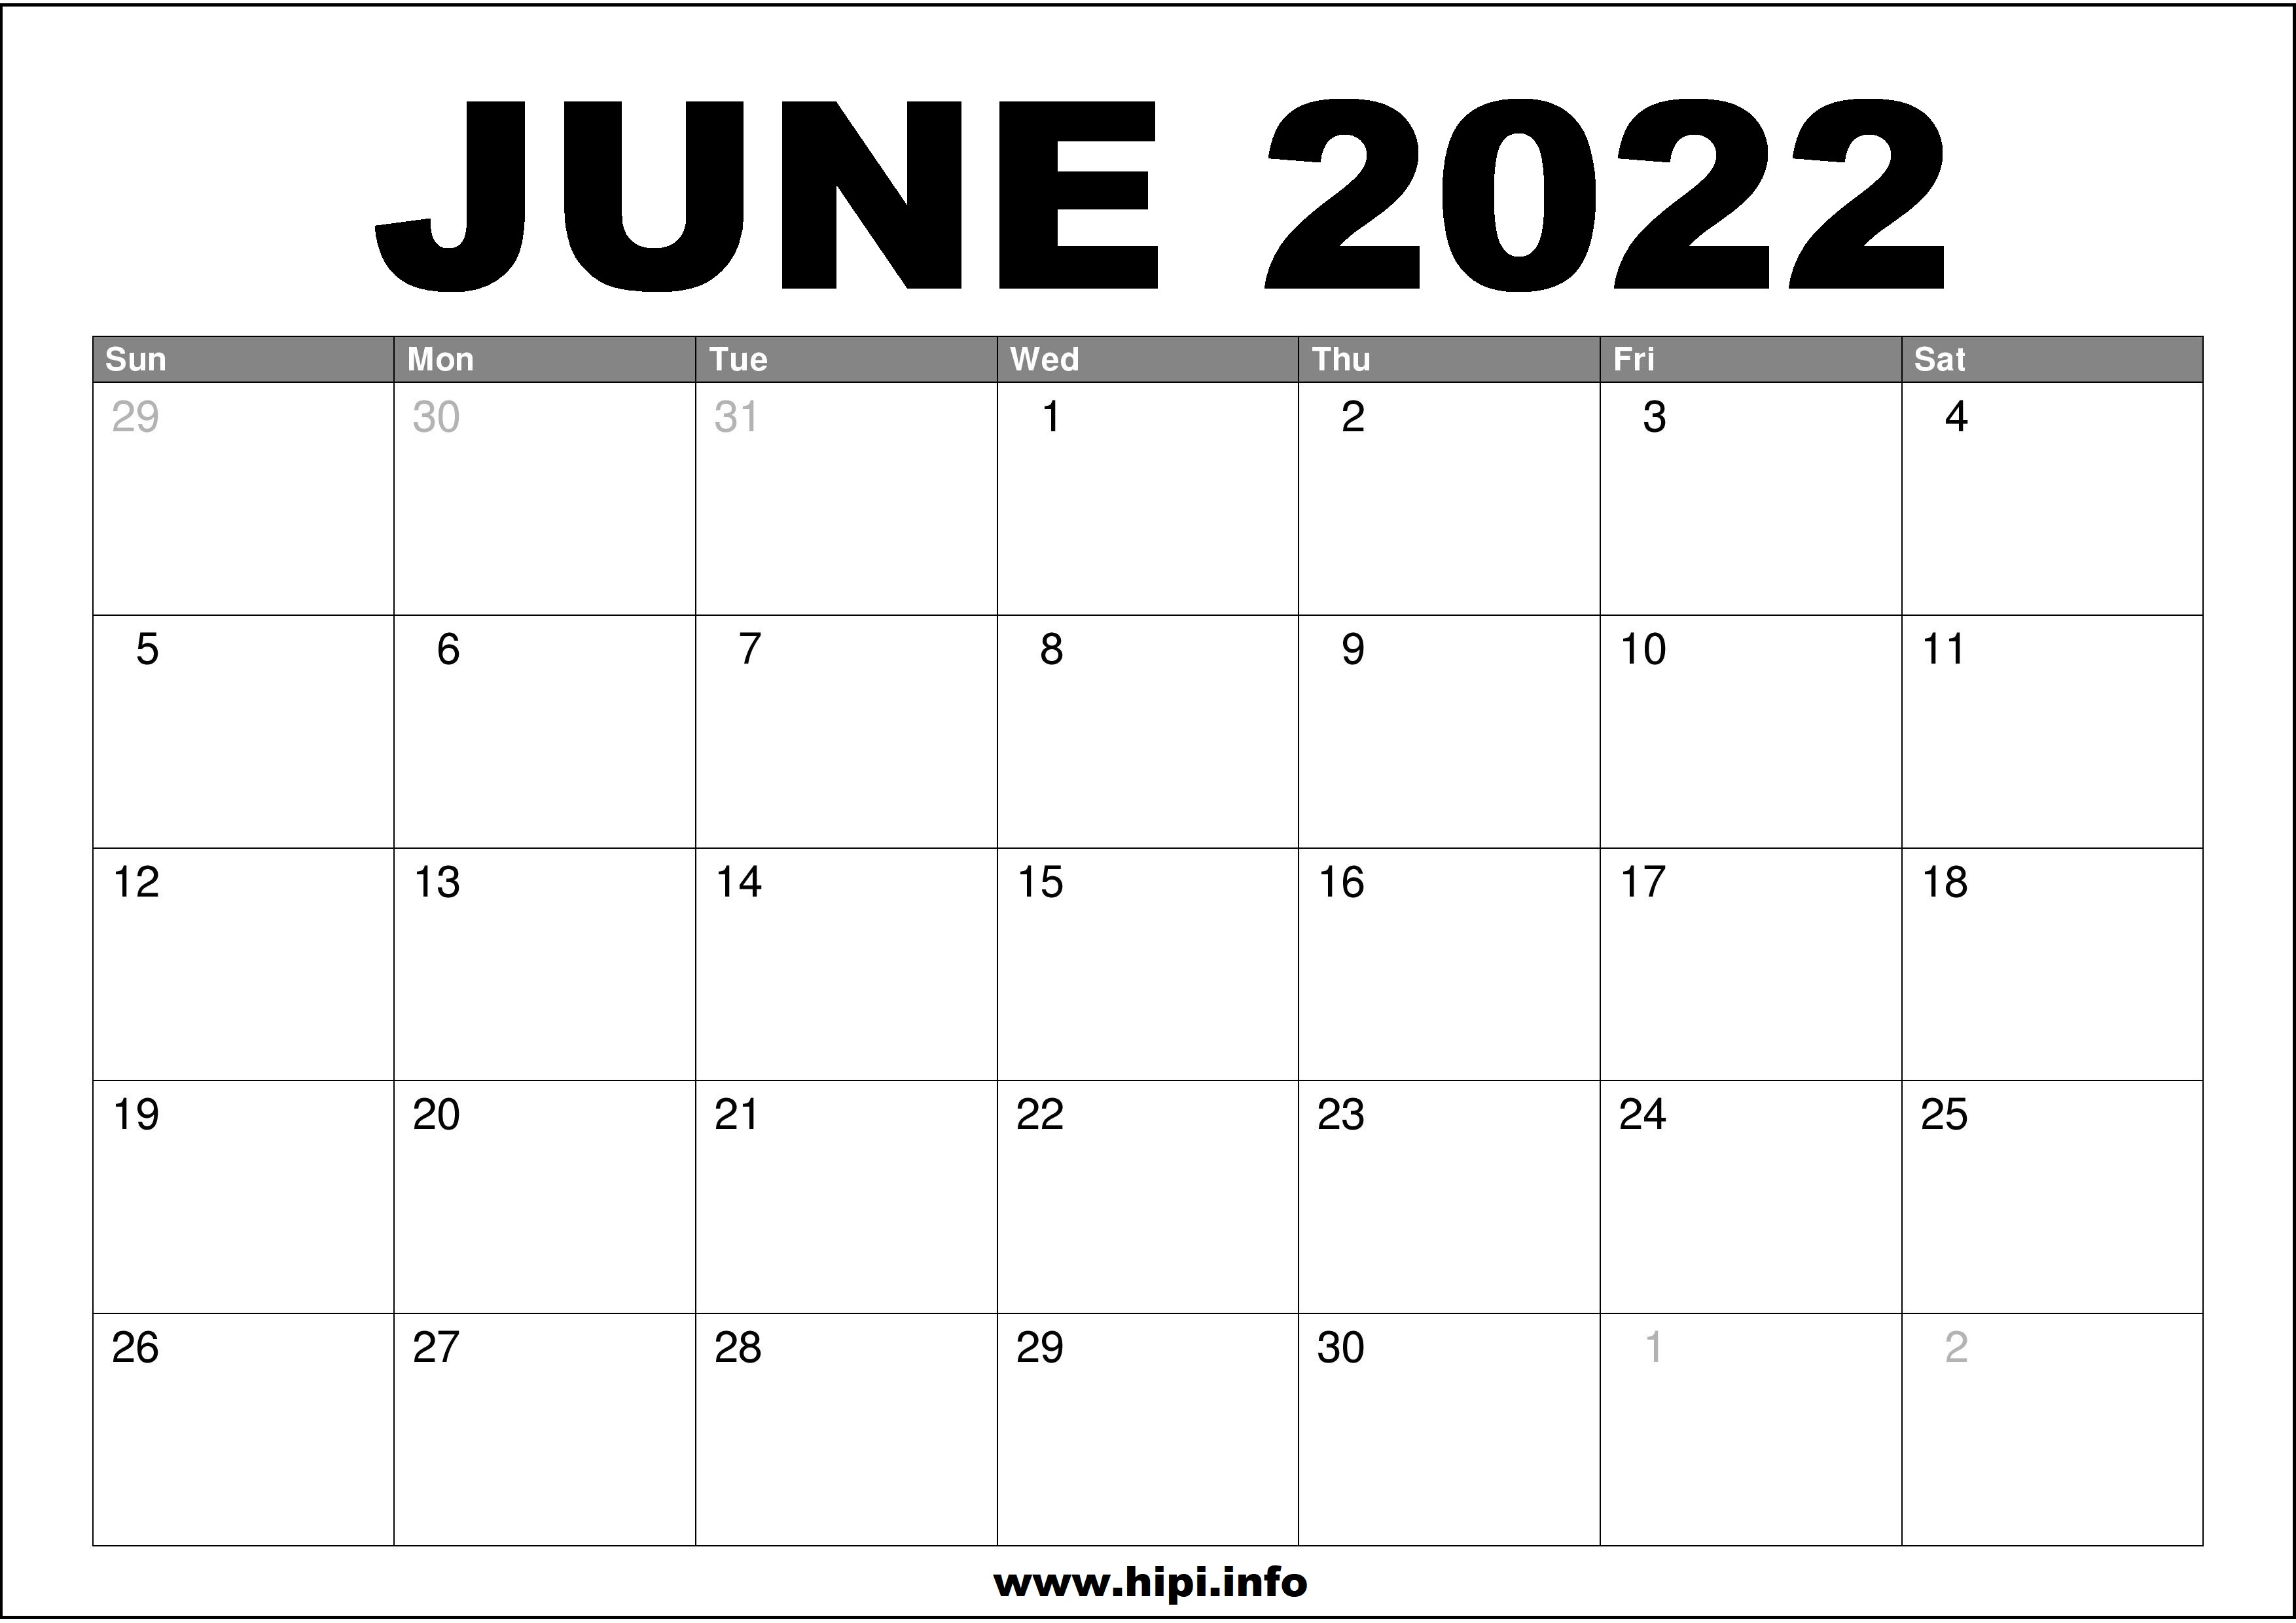 Monthly Calendar 2022 June June 2022 Calendar Printable Free - Hipi.info | Calendars Printable Free